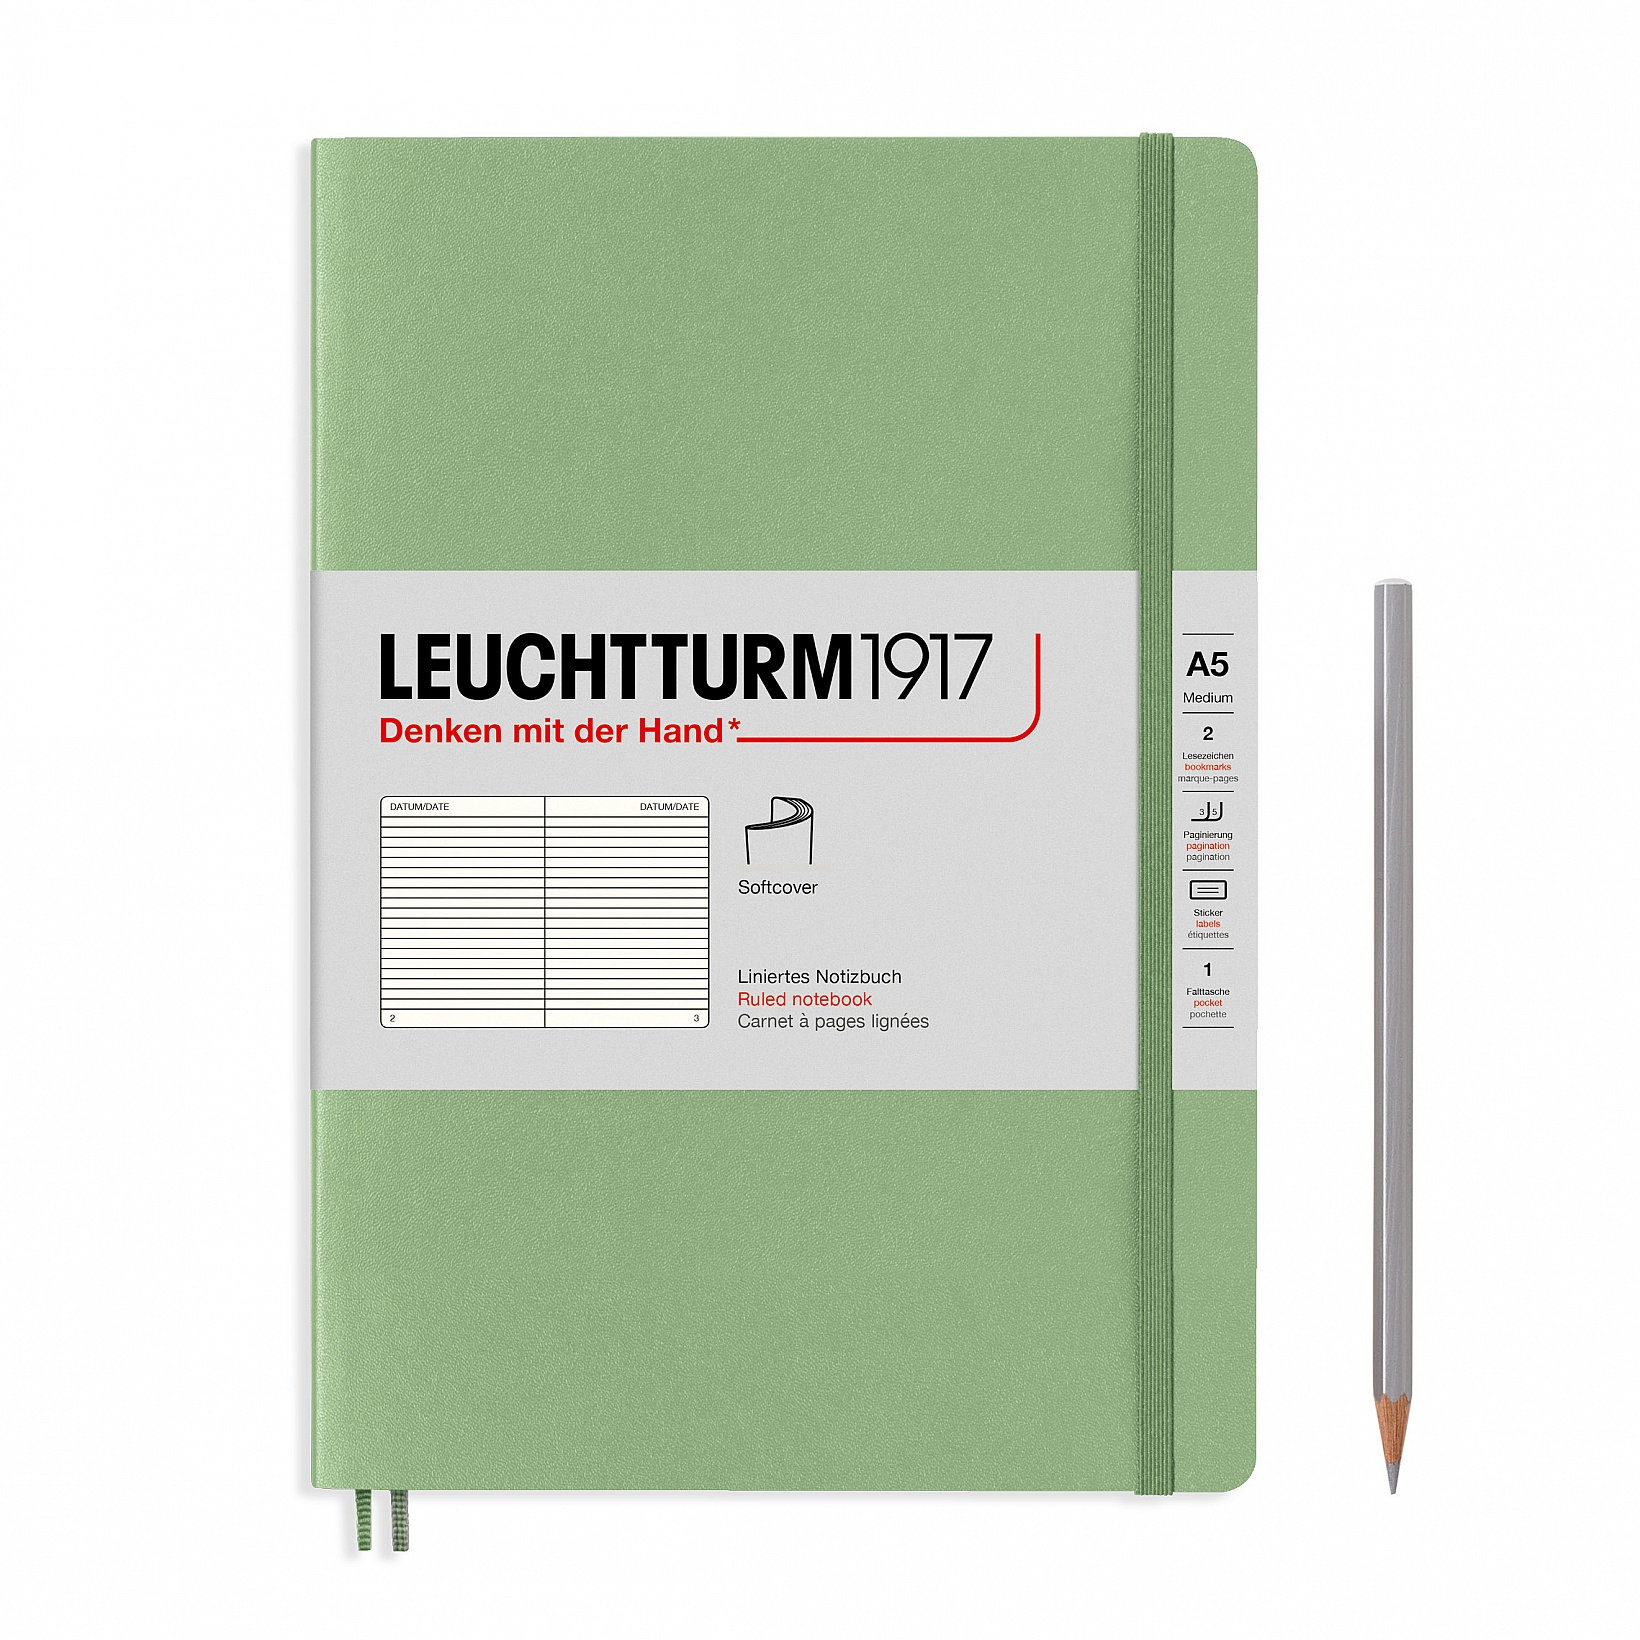 Notizbuch Softcover Medium A5 - grün